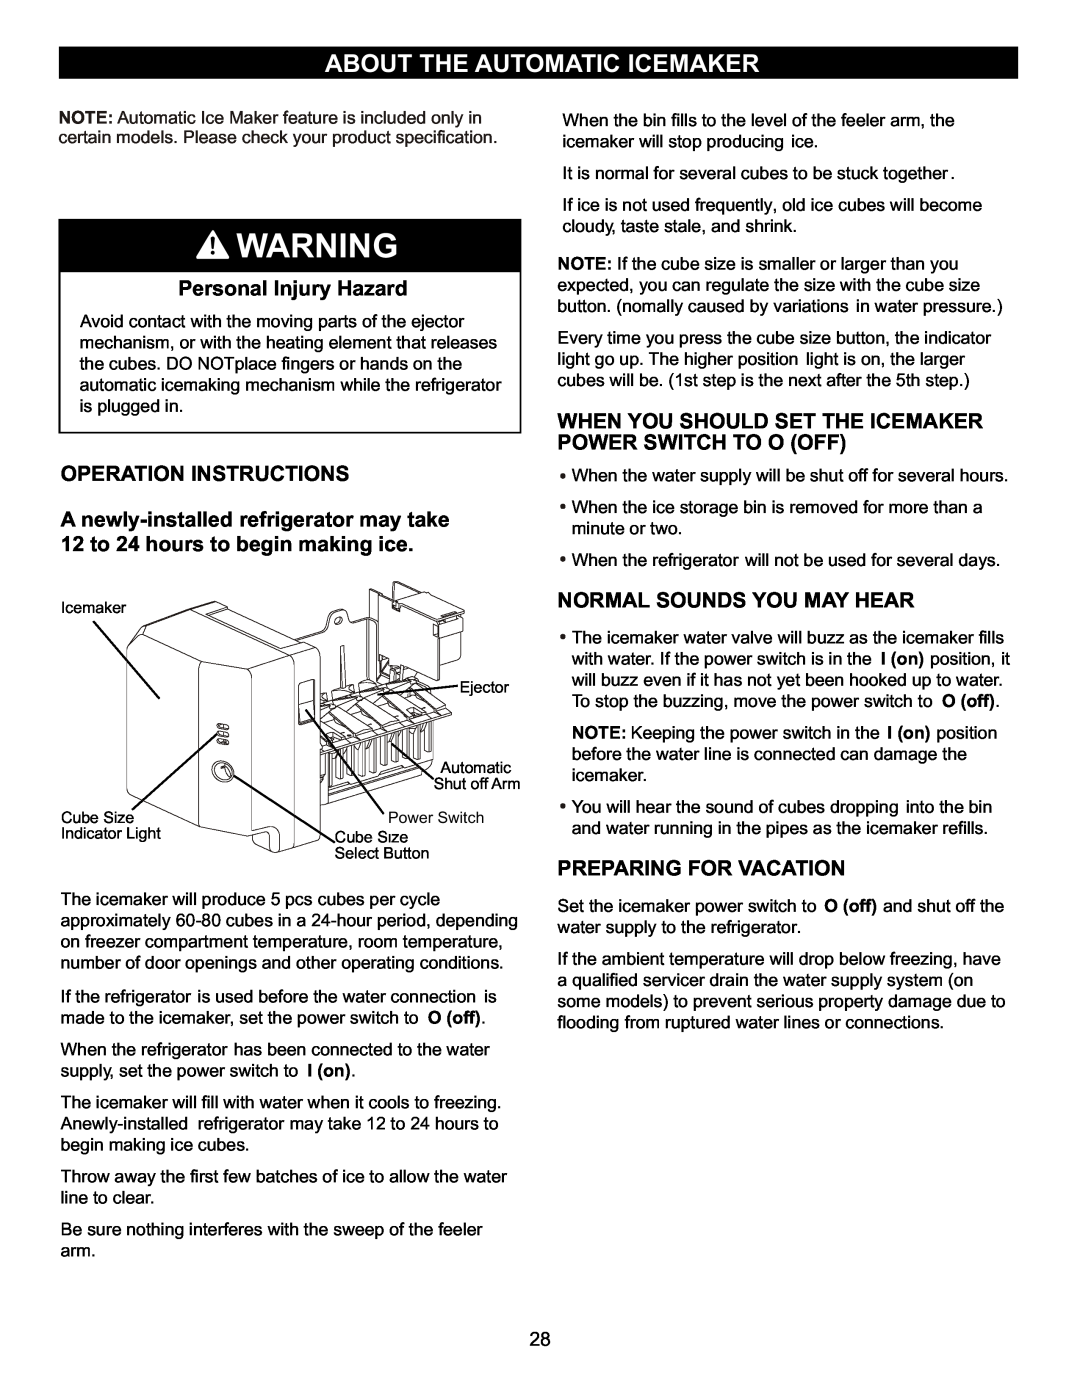 LG Electronics MFL47277003, LFX23961SB About The Automatic Icemaker, Personal Injury Hazard, Operation Instructions 